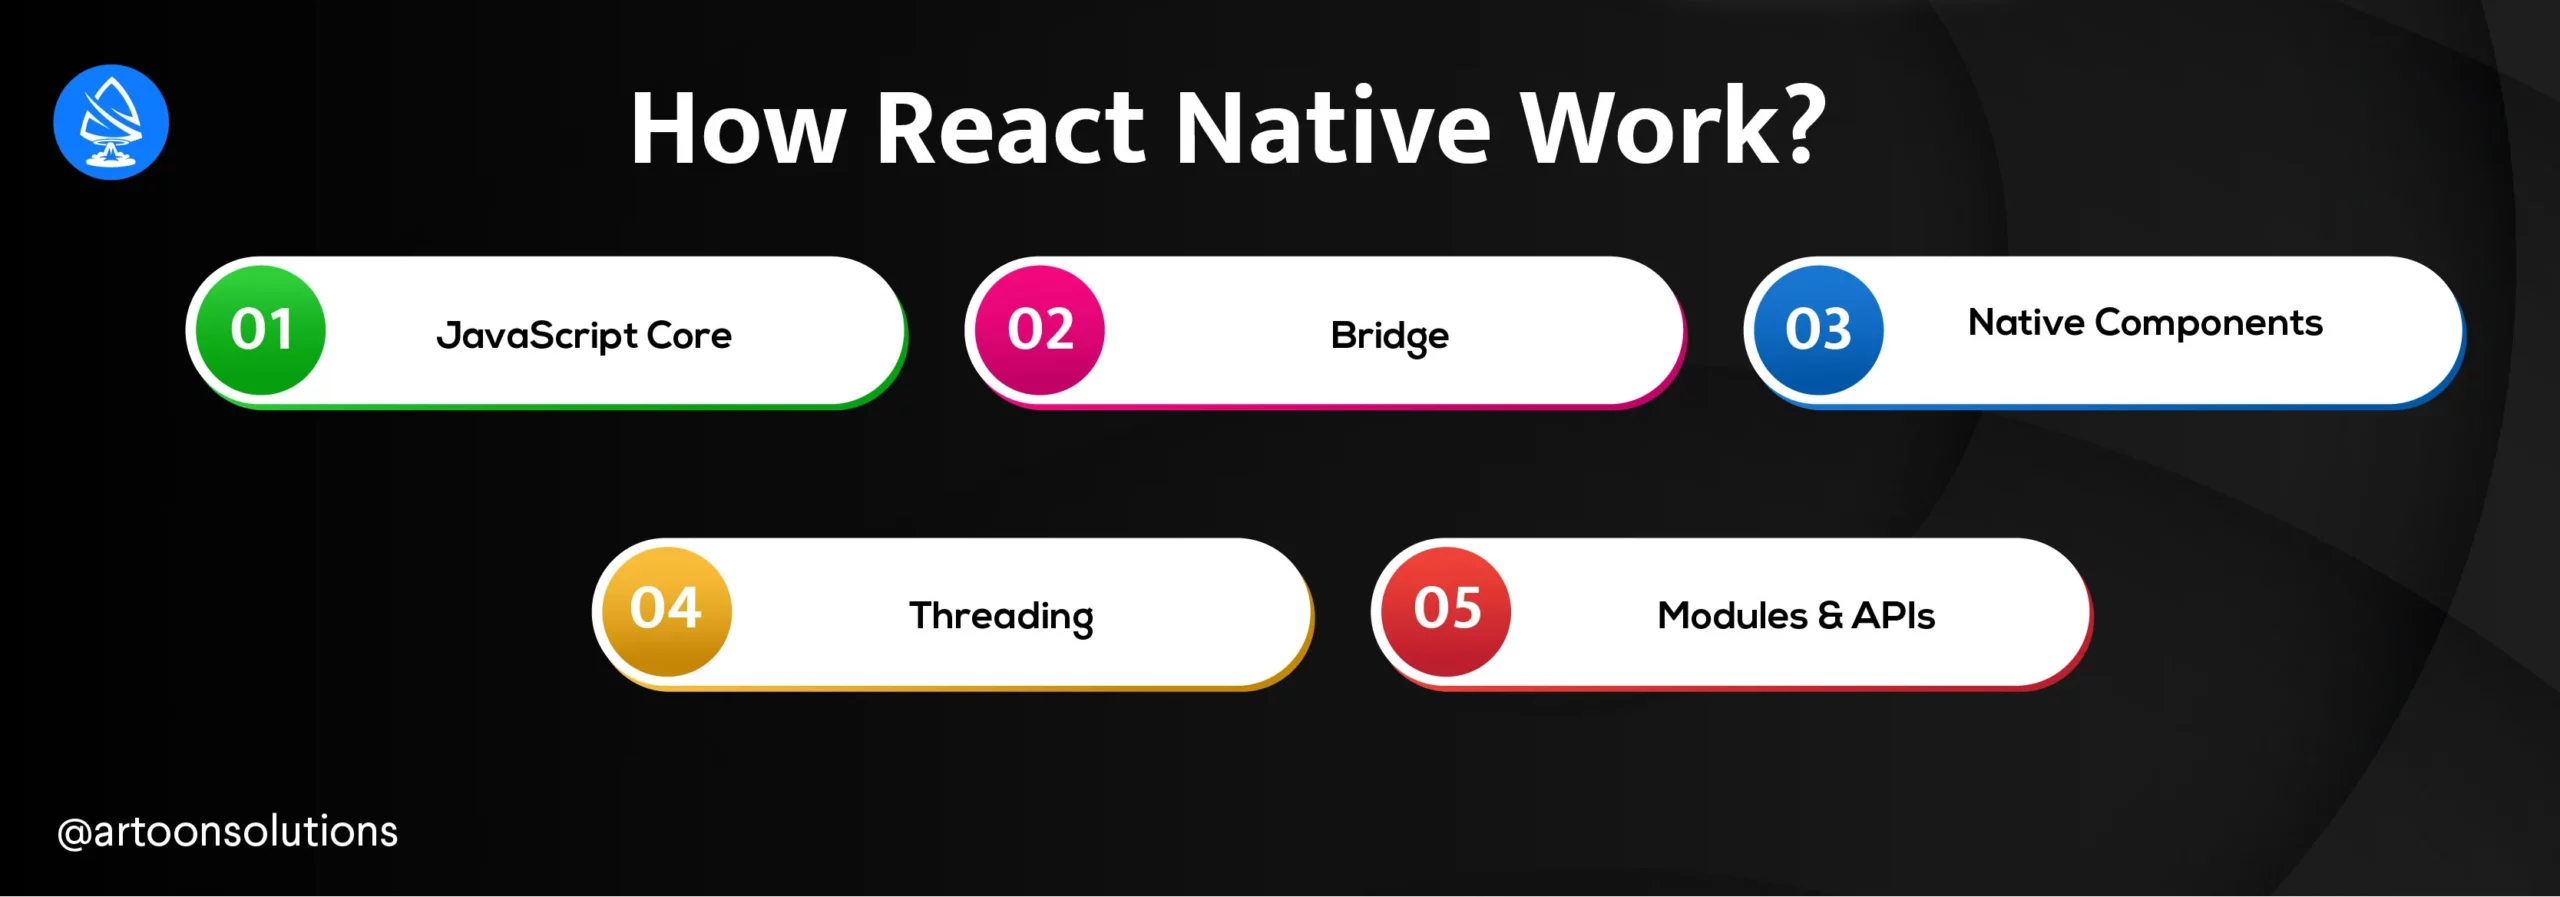 How React Native Work